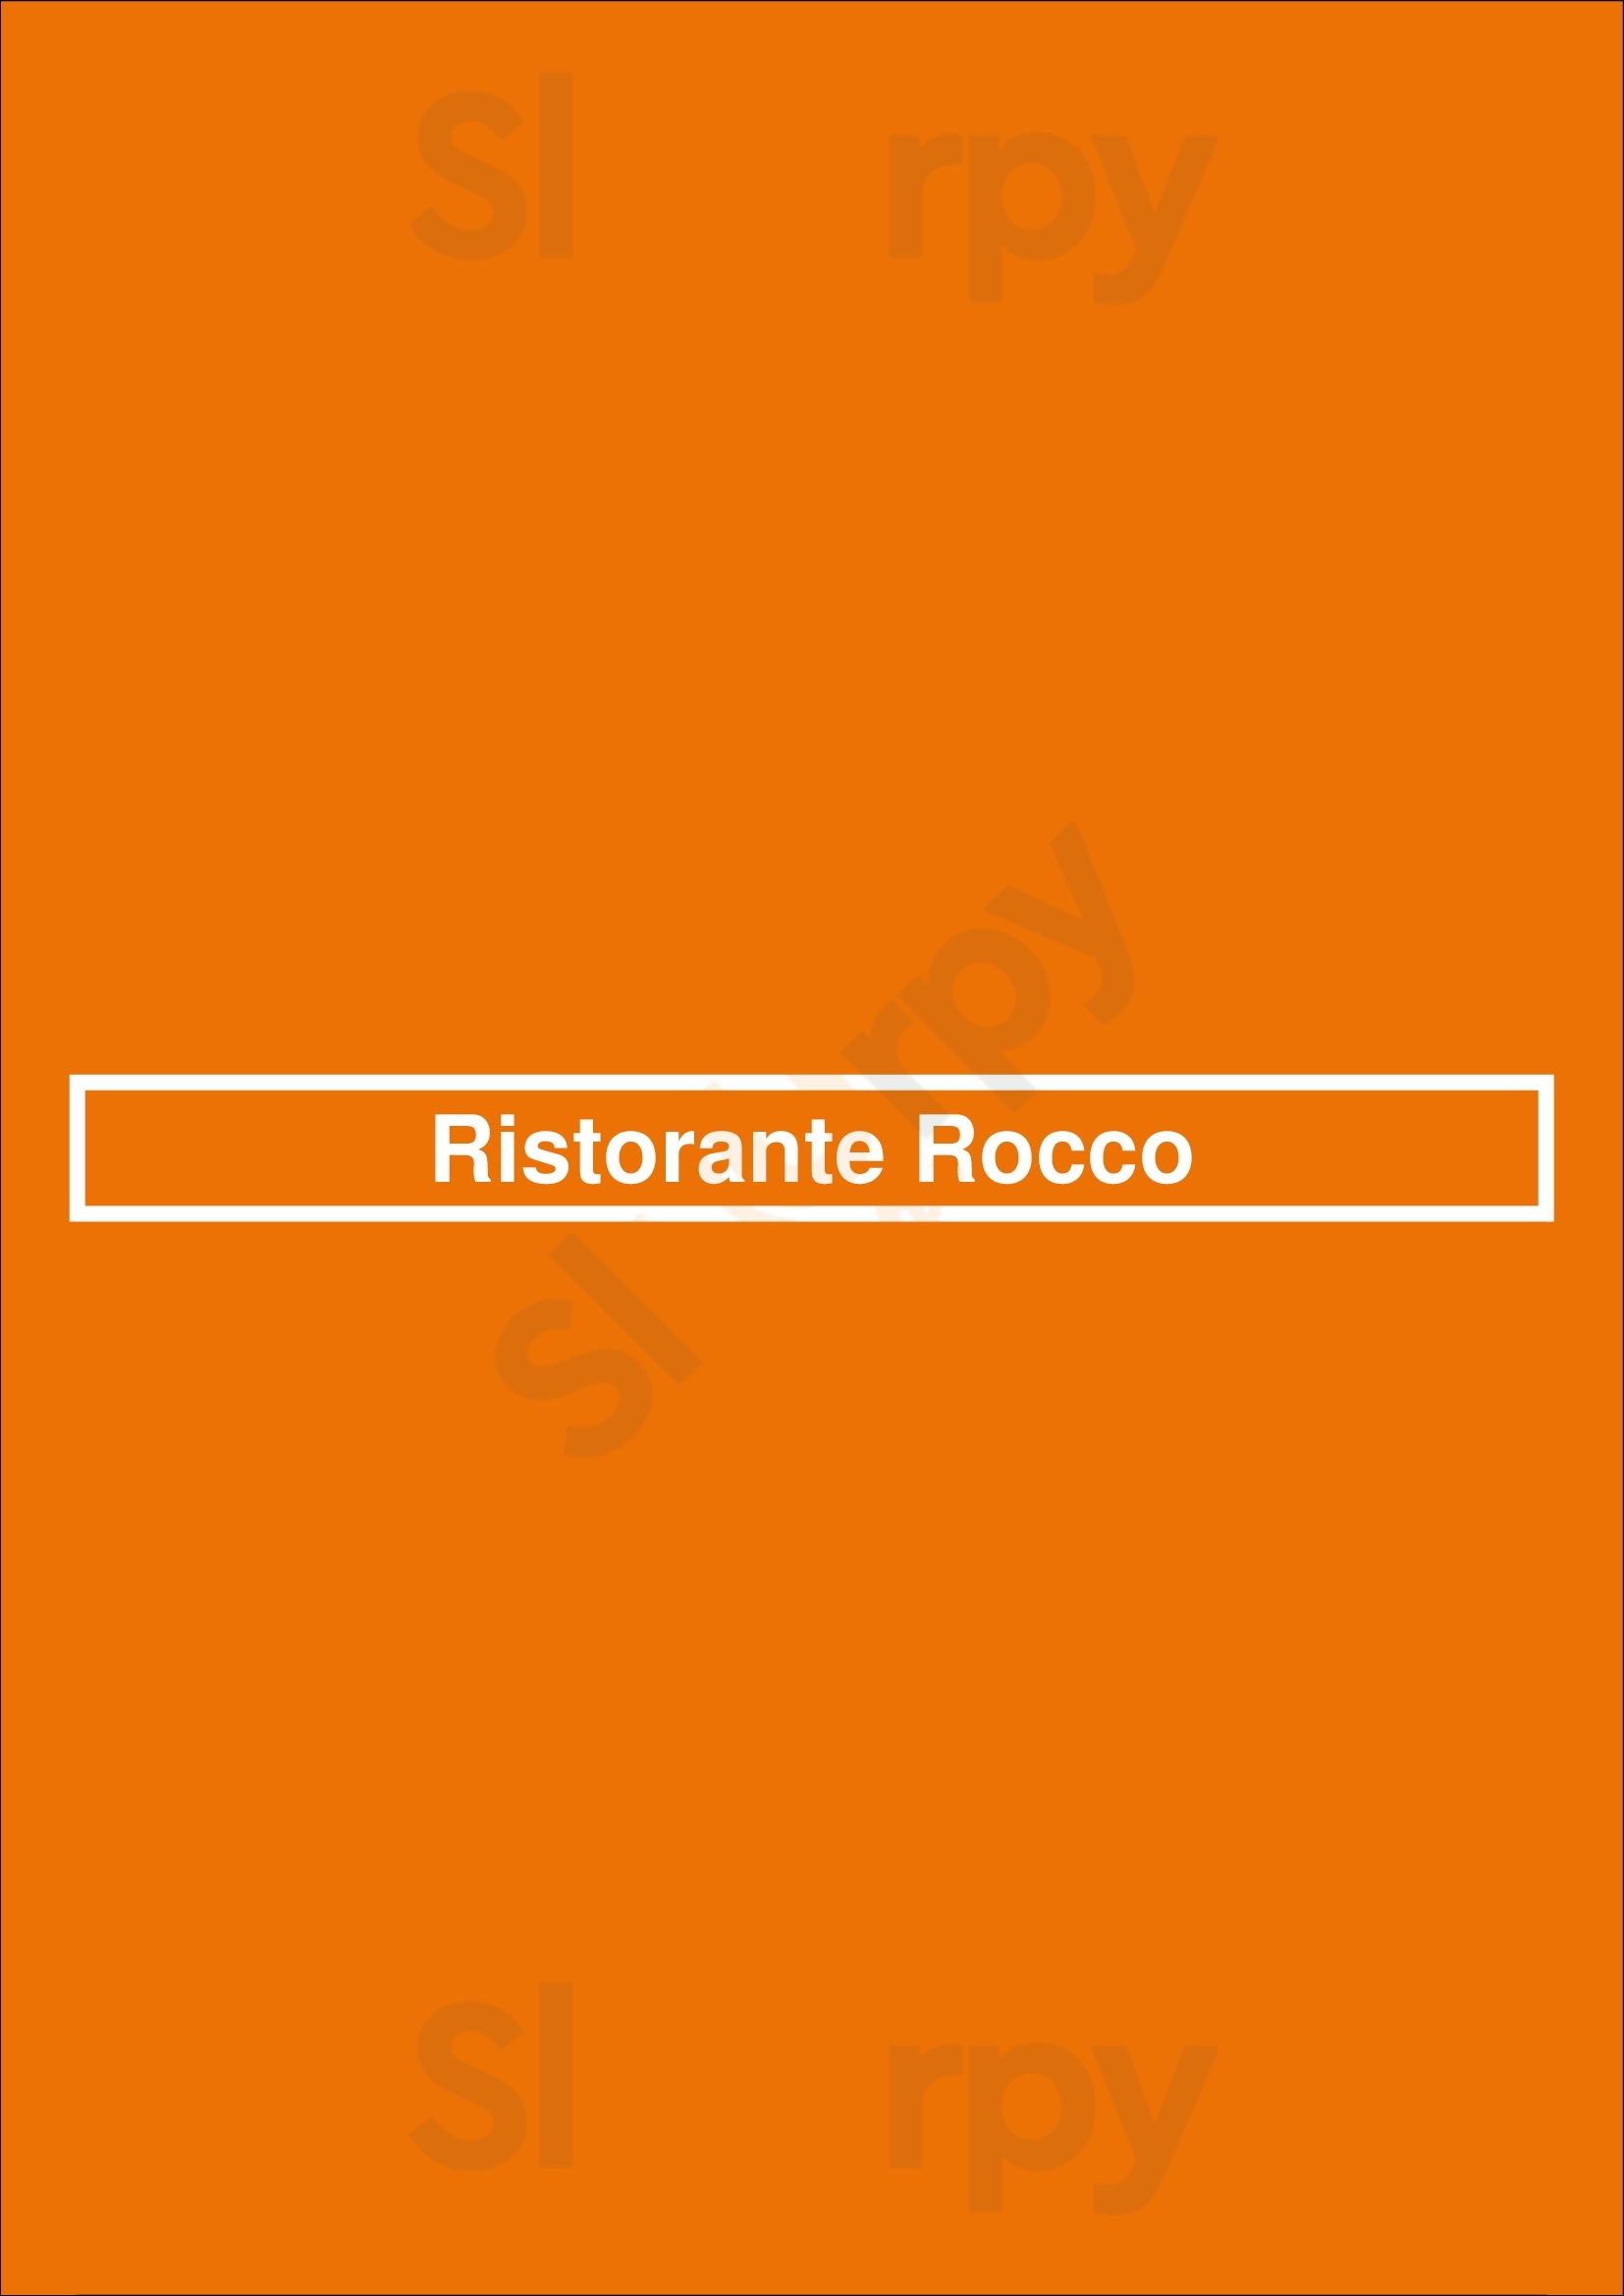 Ristorante Rocco Hamburg Menu - 1